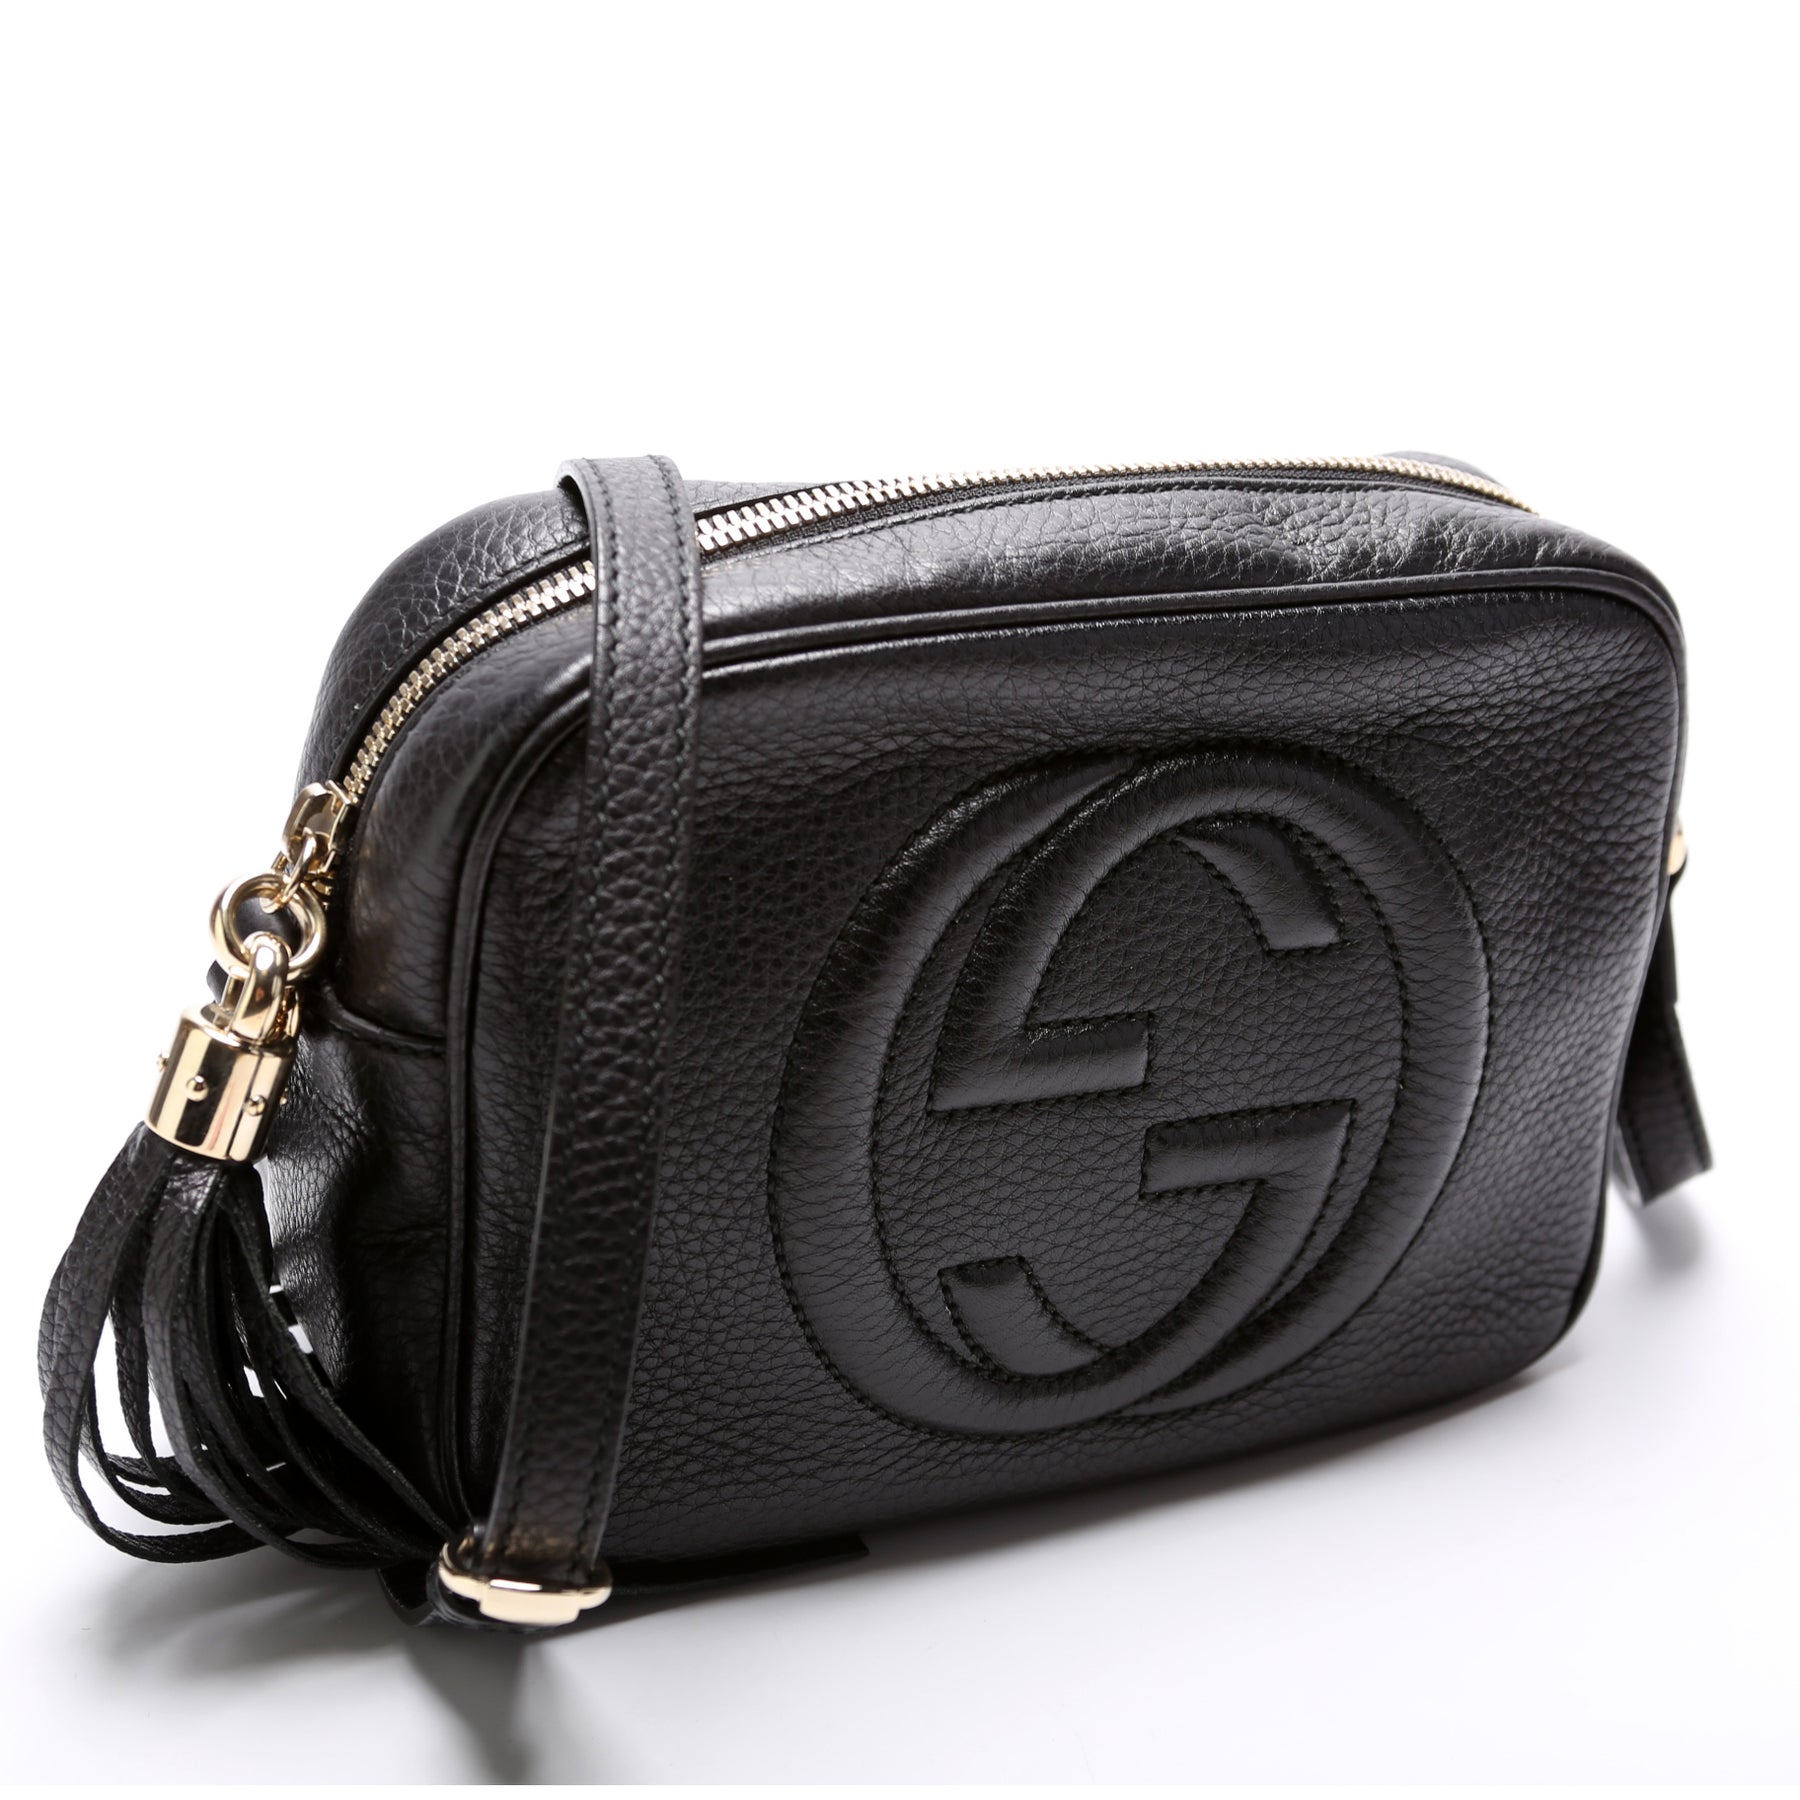 Gucci Soho Disco Small Leather Crossbody Bag Black